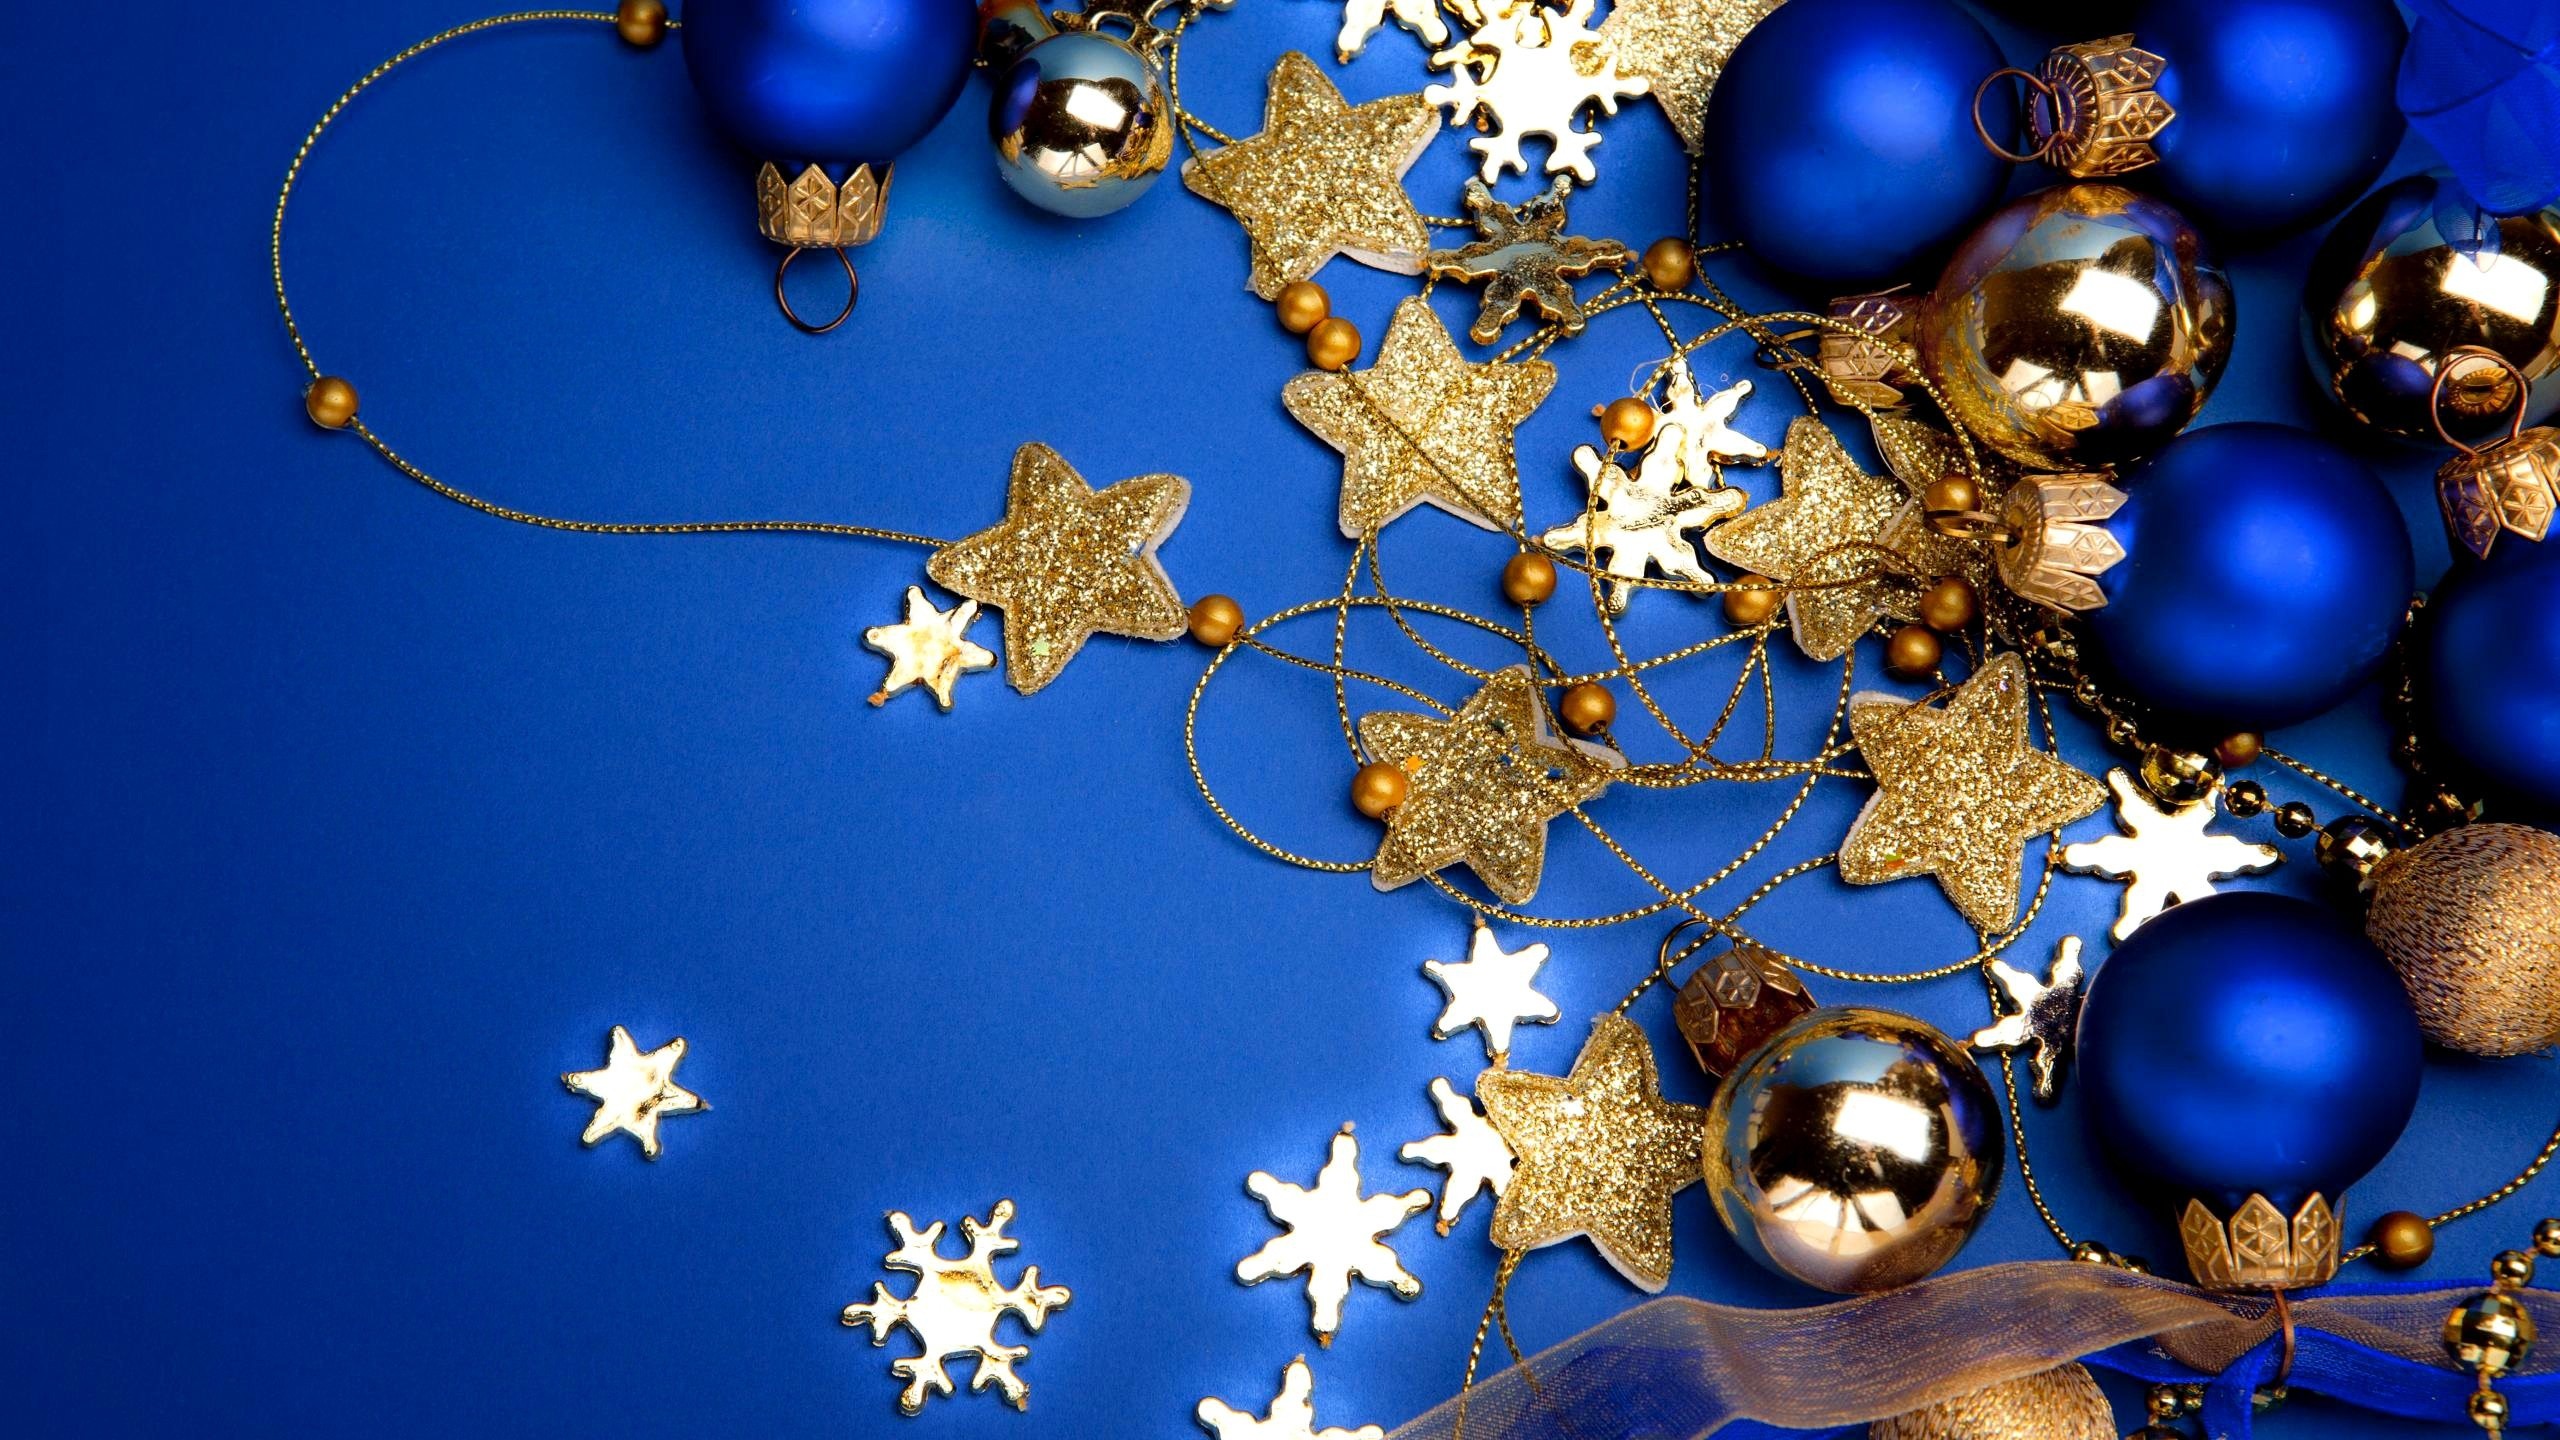 2560x1440, Blue Christmas Theme Wallpaper 2014 
 Data - Blue Christmas Background Hd - HD Wallpaper 